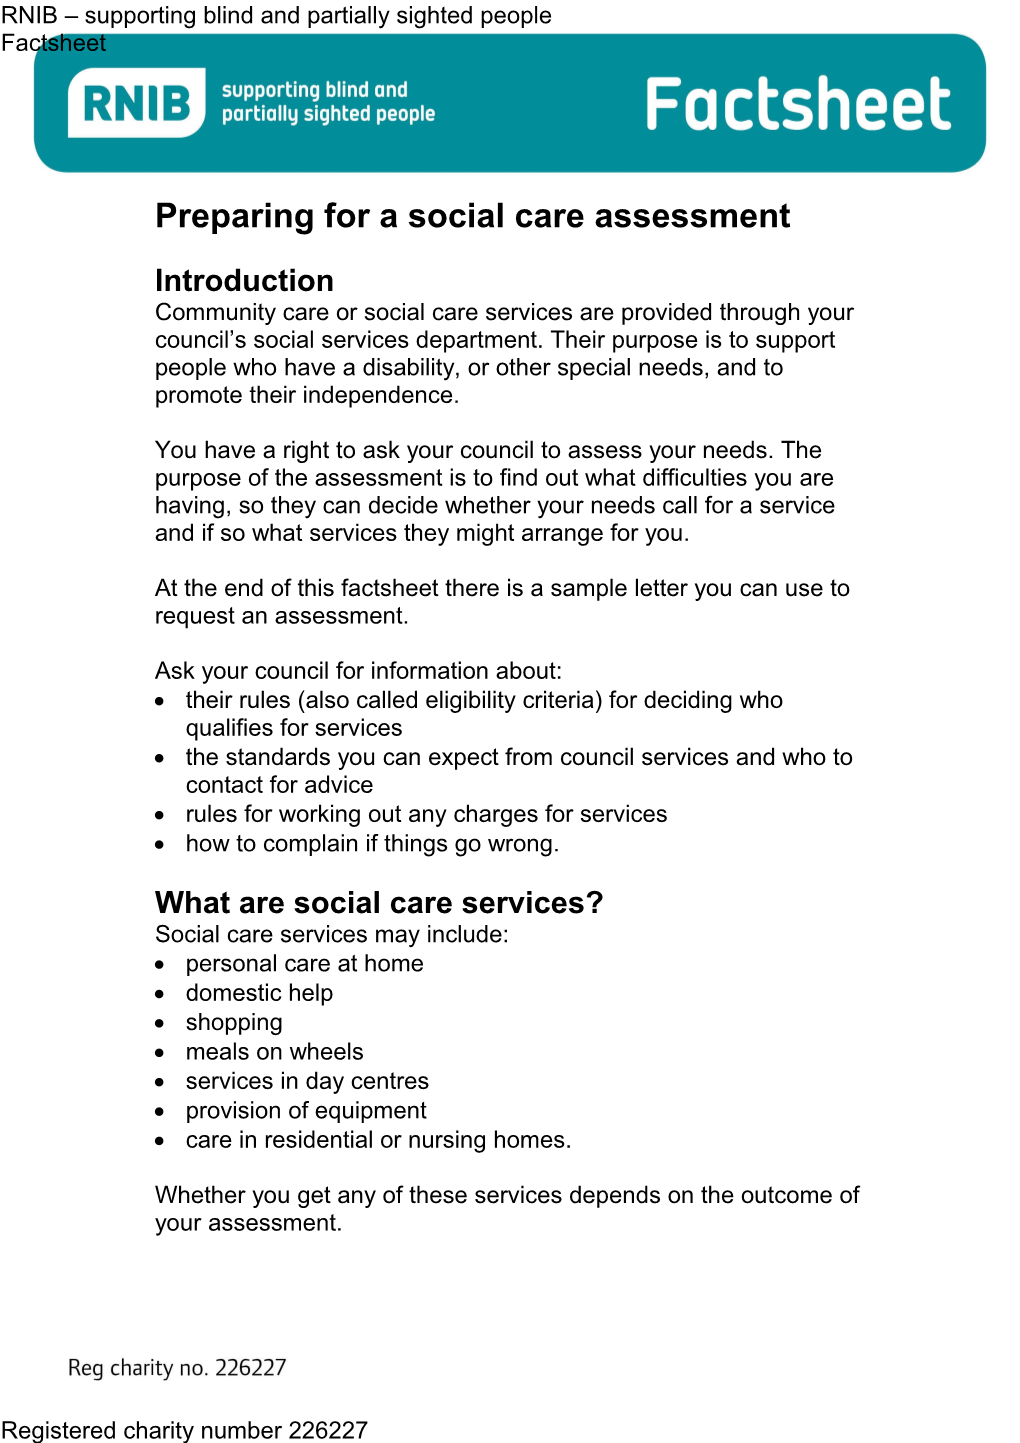 Preparing for a Social Care Assessment Factsheet